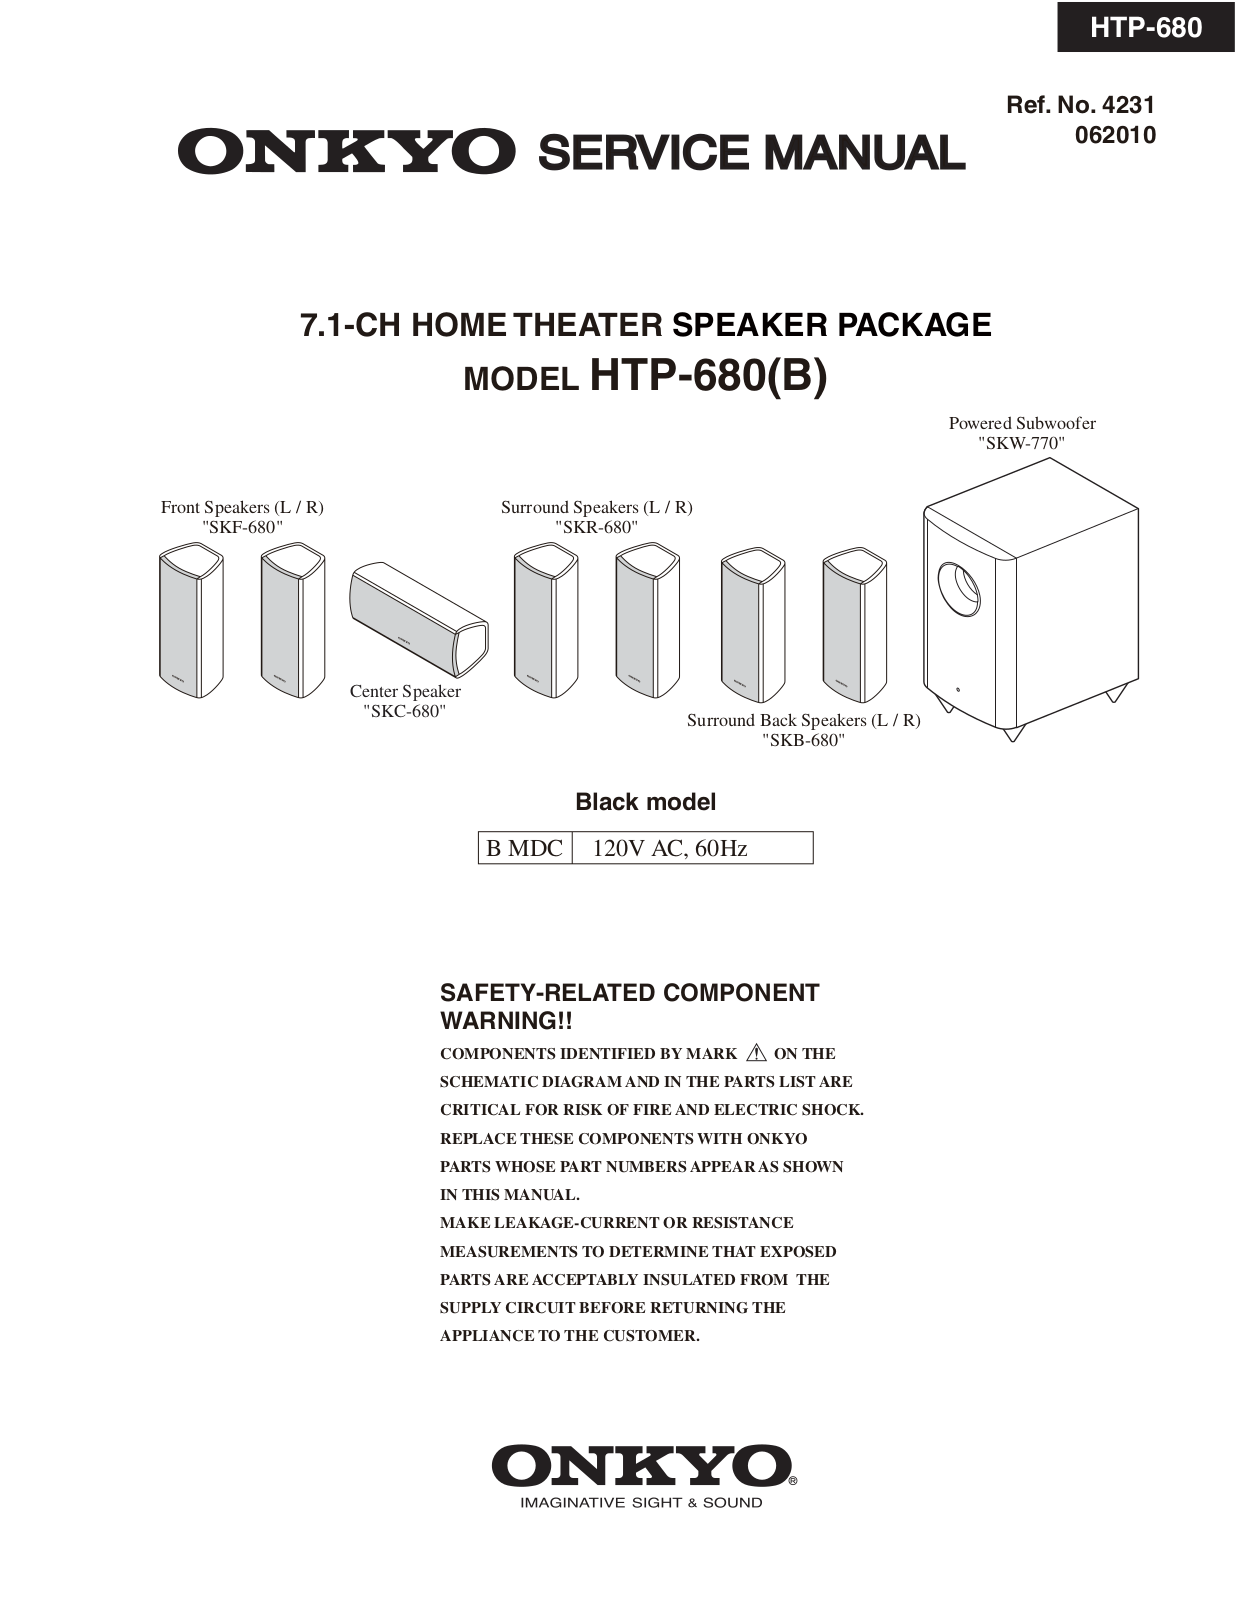 Onkyo HTP-680 Service Manual